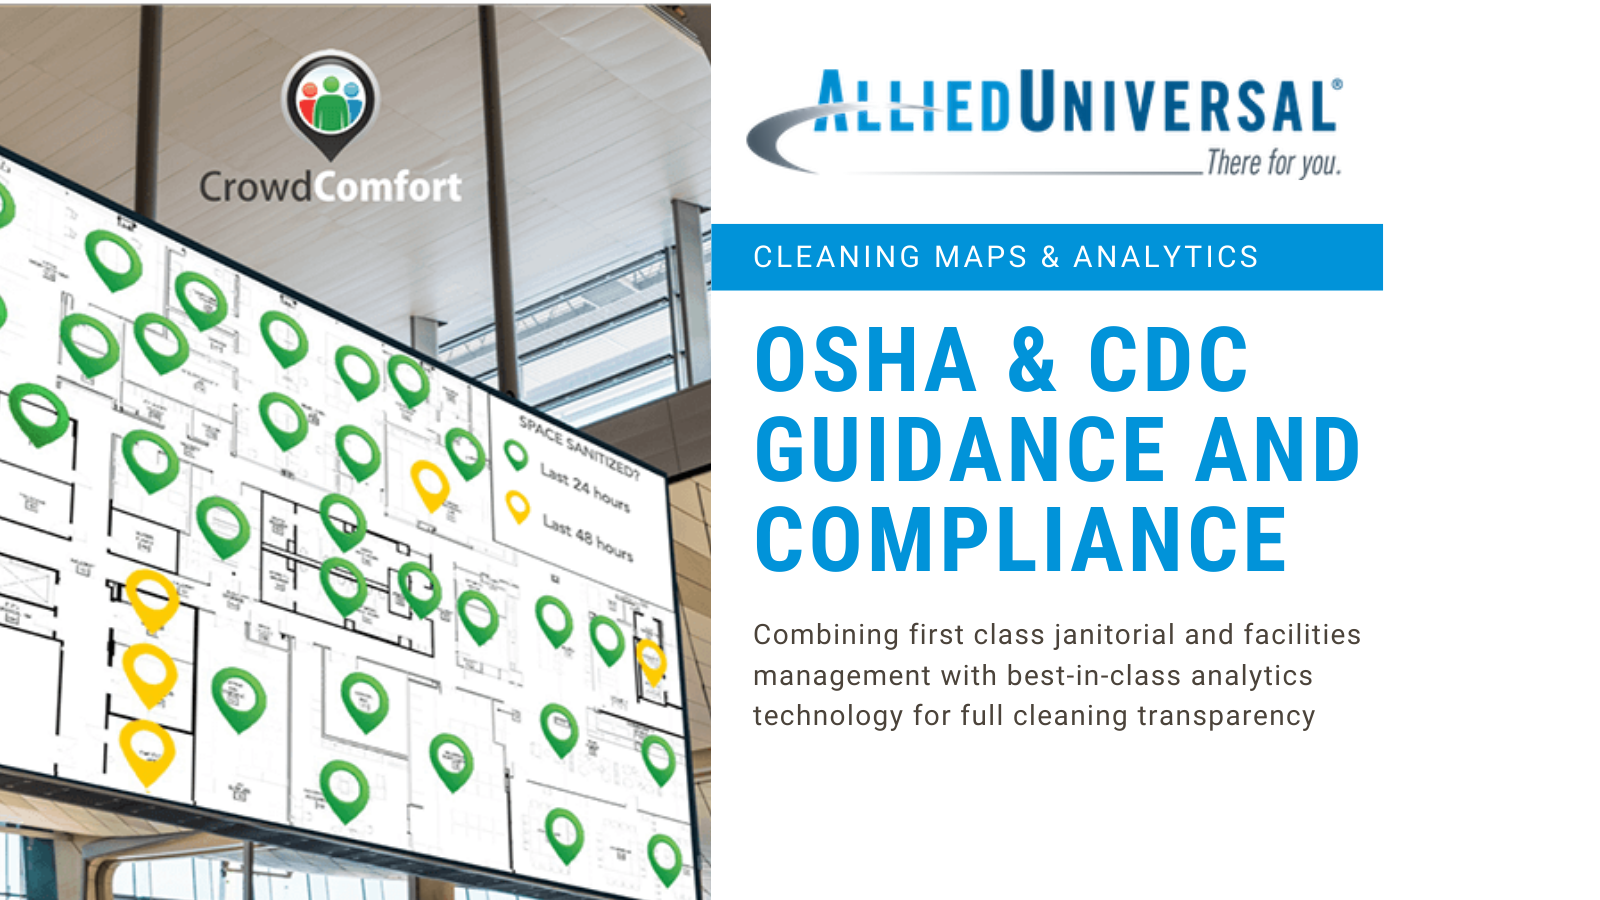 Allied Universal OSHA & CDC Compliance